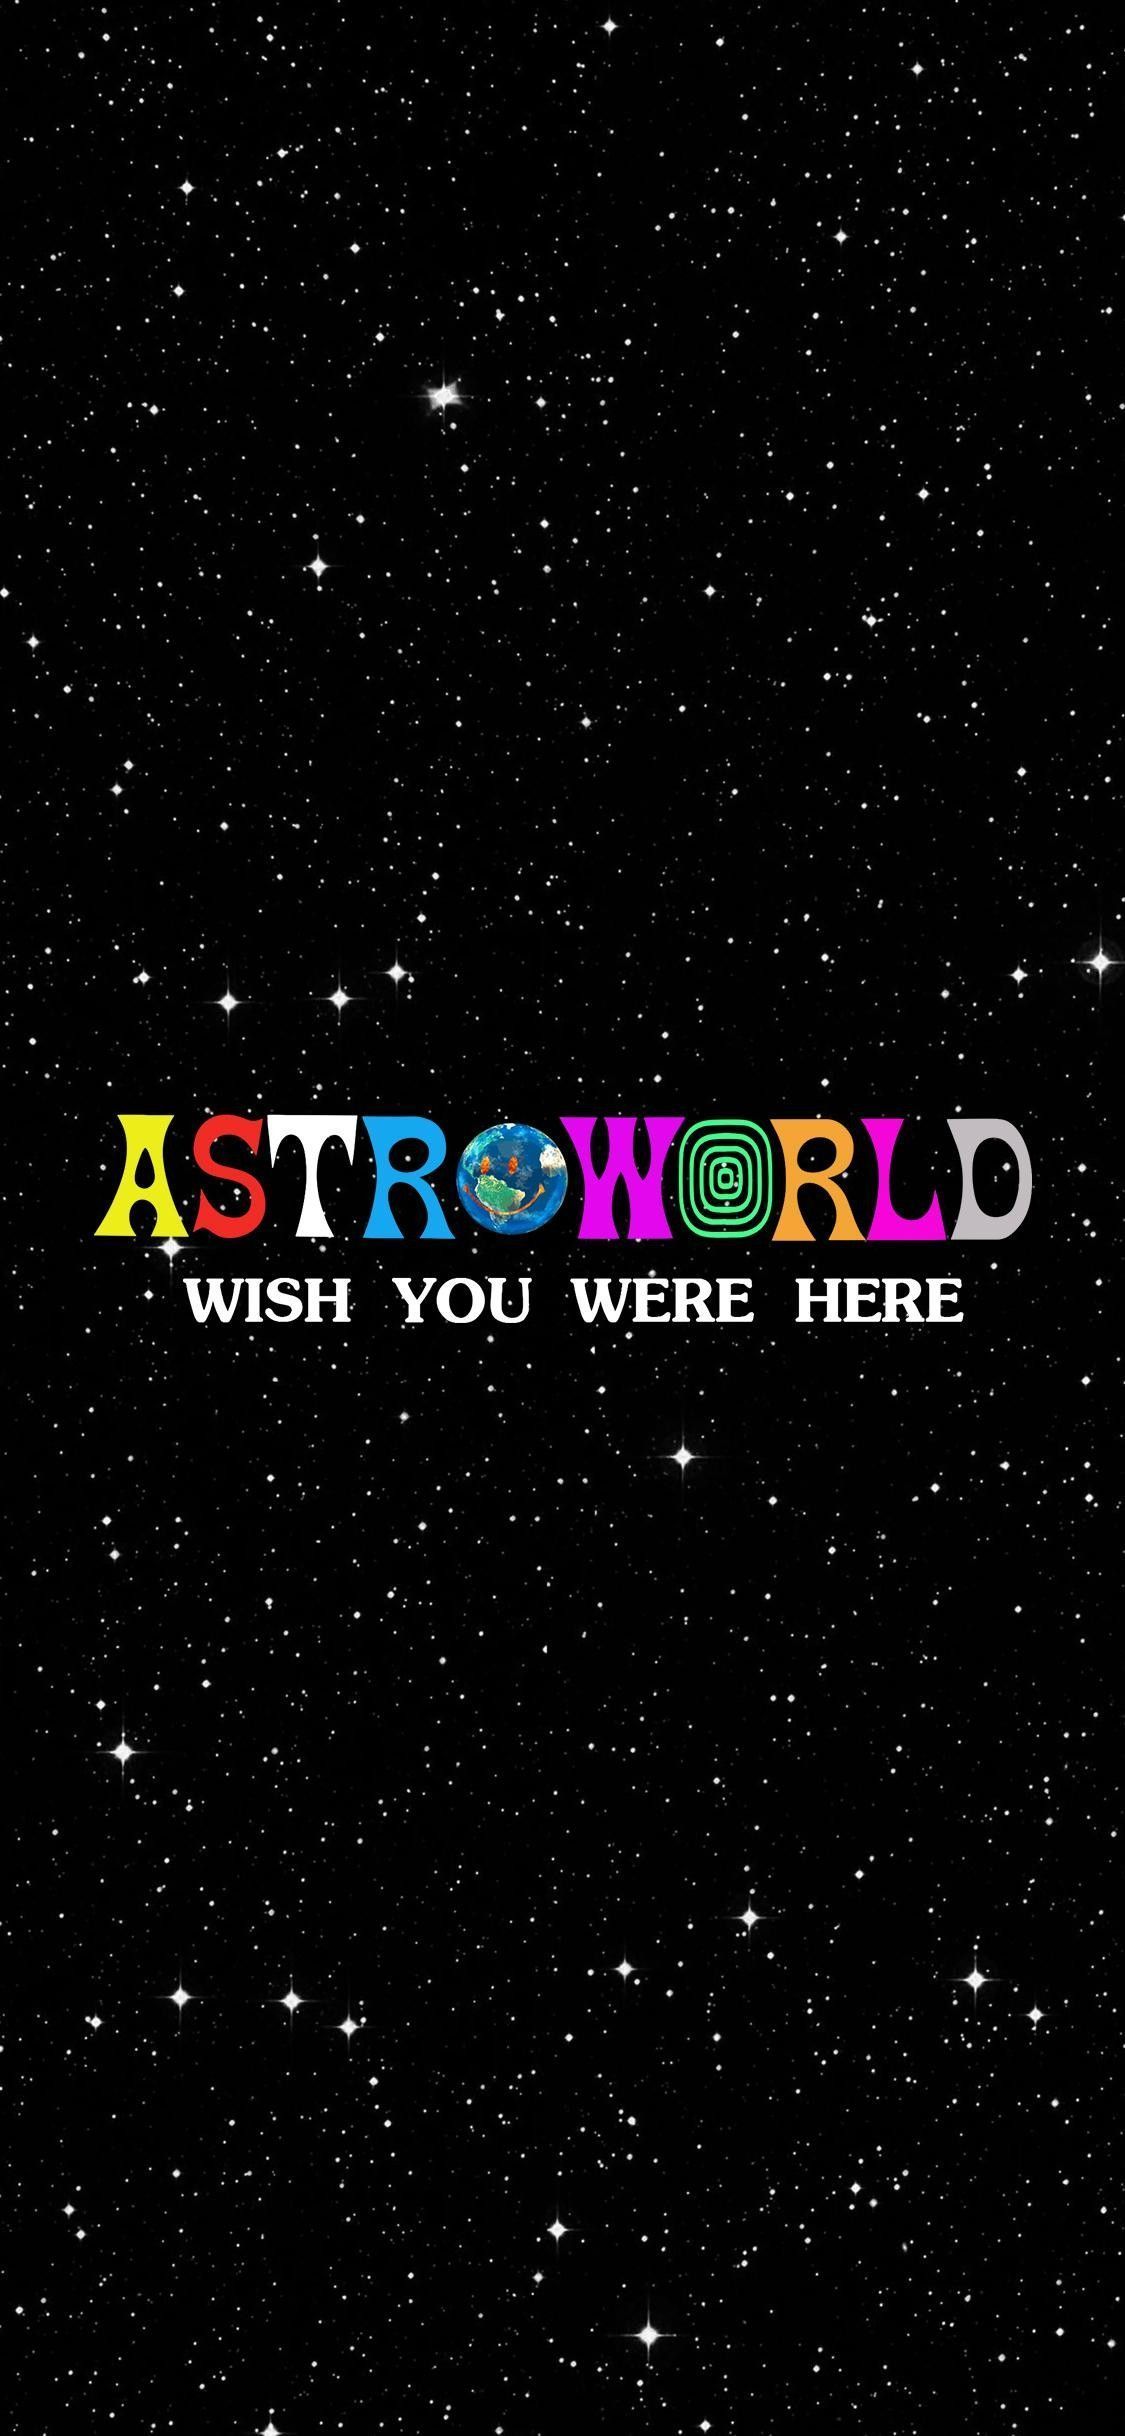 Astroworld HD Wallpapers Free download - PixelsTalk.Net